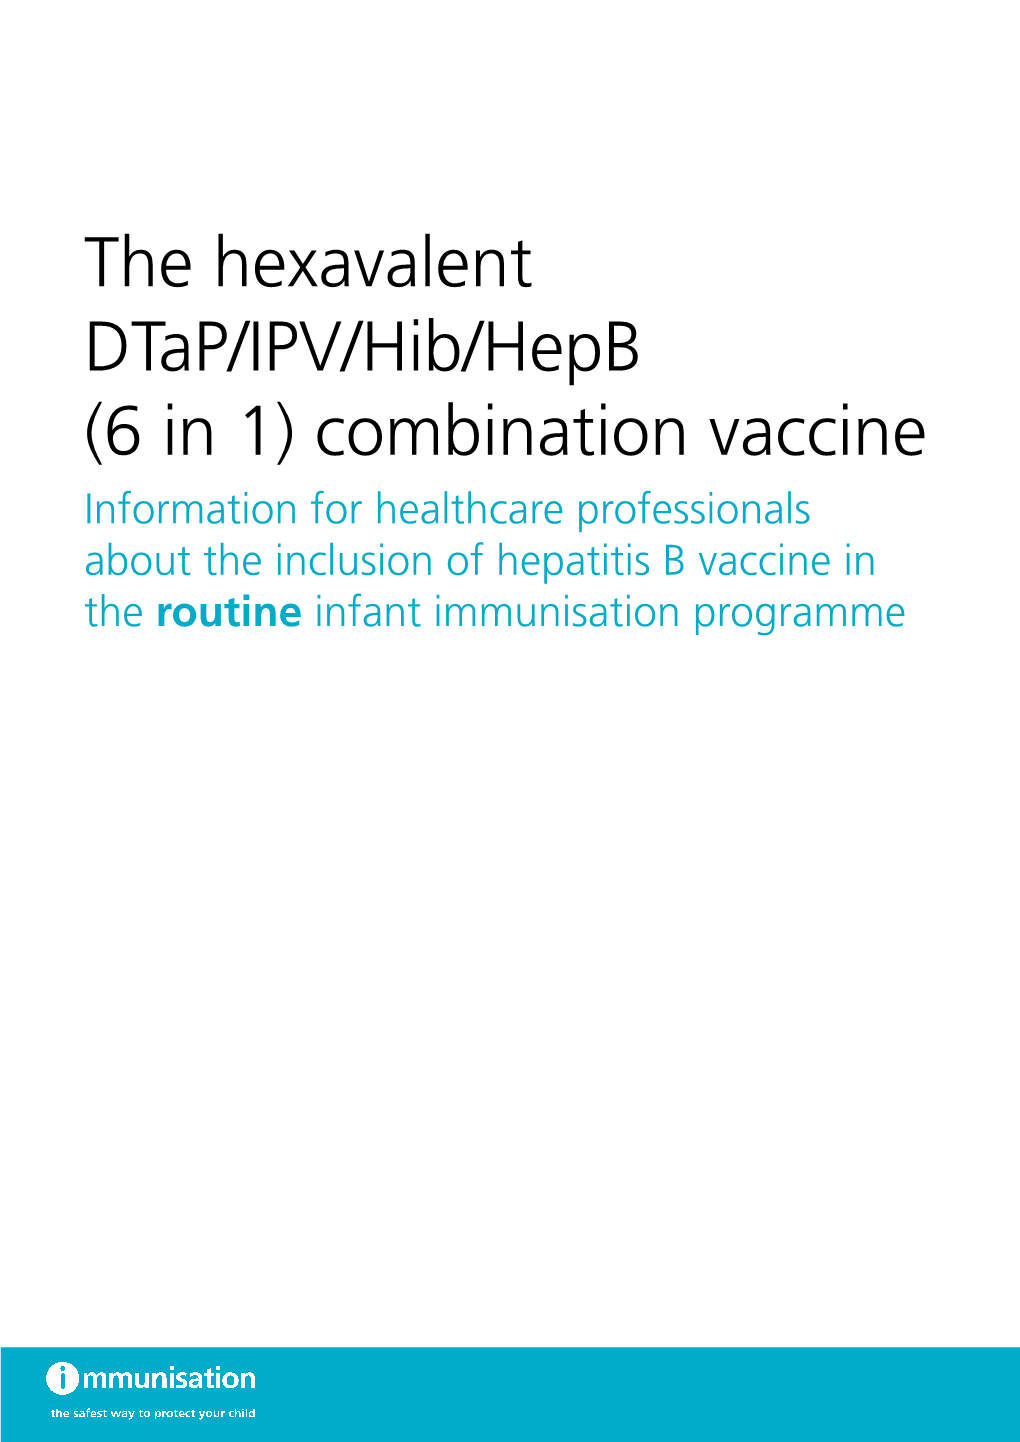 The Hexavalent Dtap/IPV/Hib/Hepb